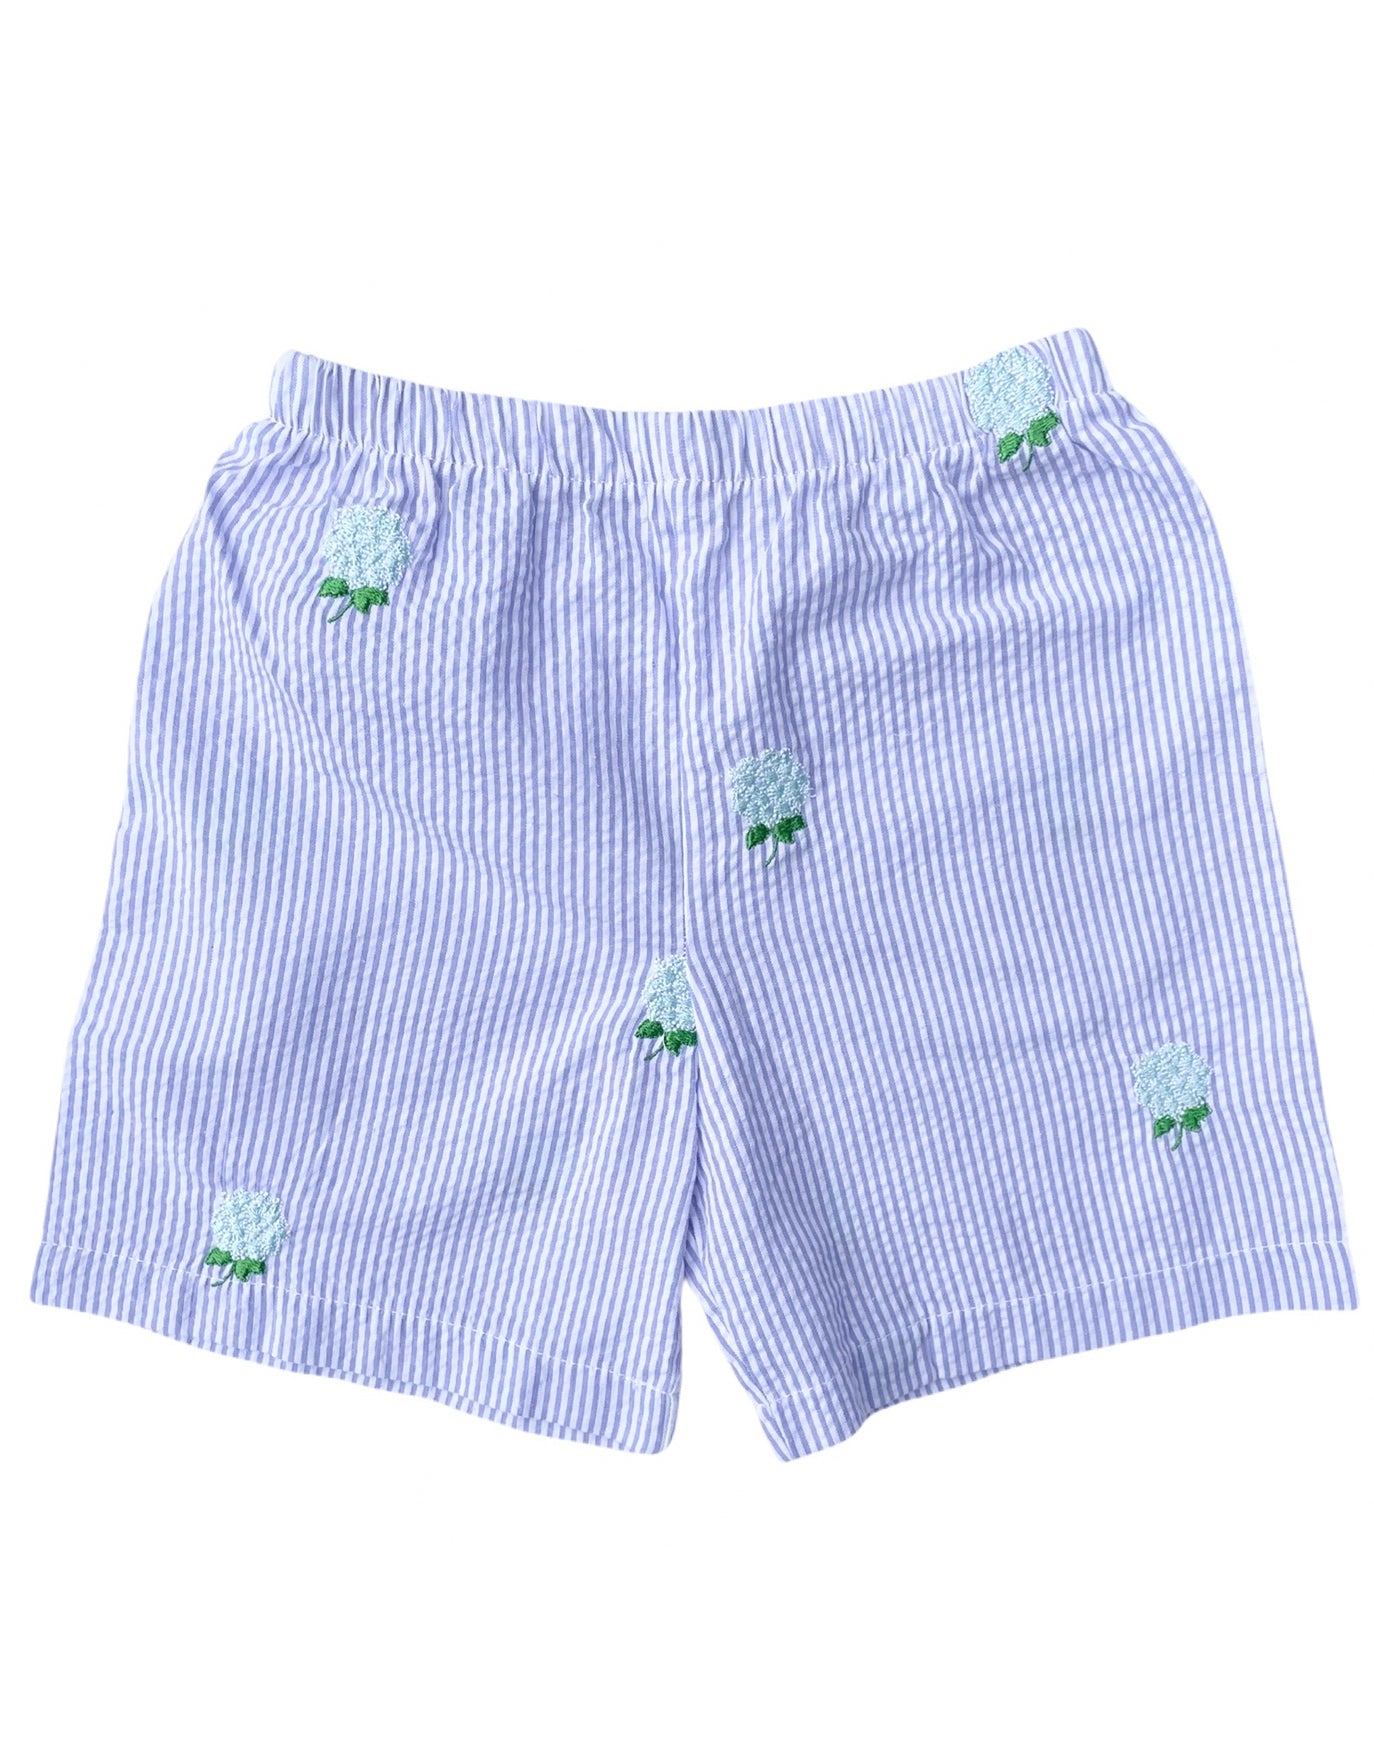 Lilac Kids Seersucker Shorts with Embroidered Hydrangeas